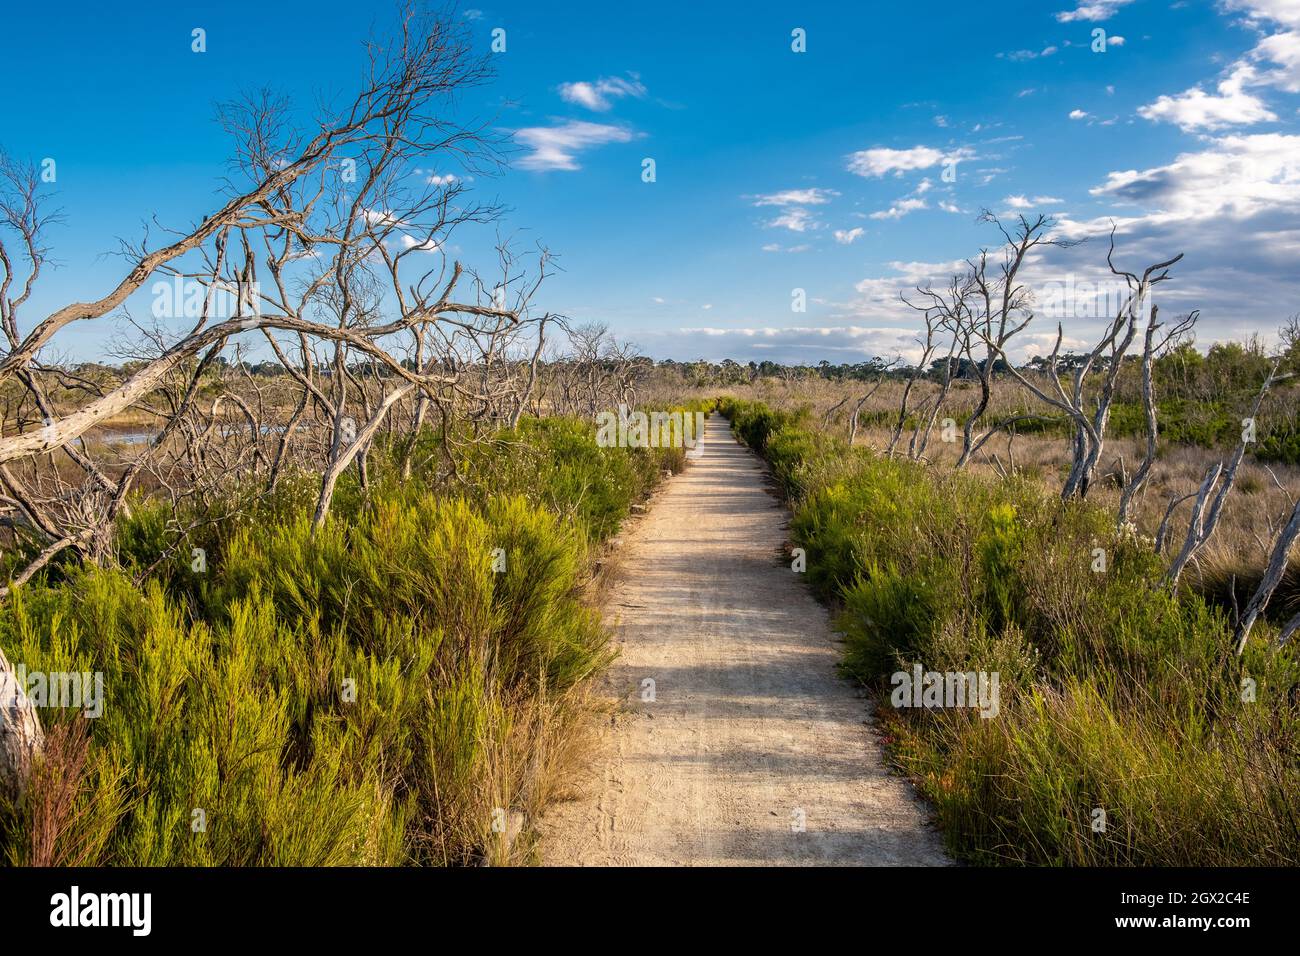 Walking Trek In Native Australian Coastal Wetlands With Bare Trees And Bush On Bright Summer Day Stock Photo